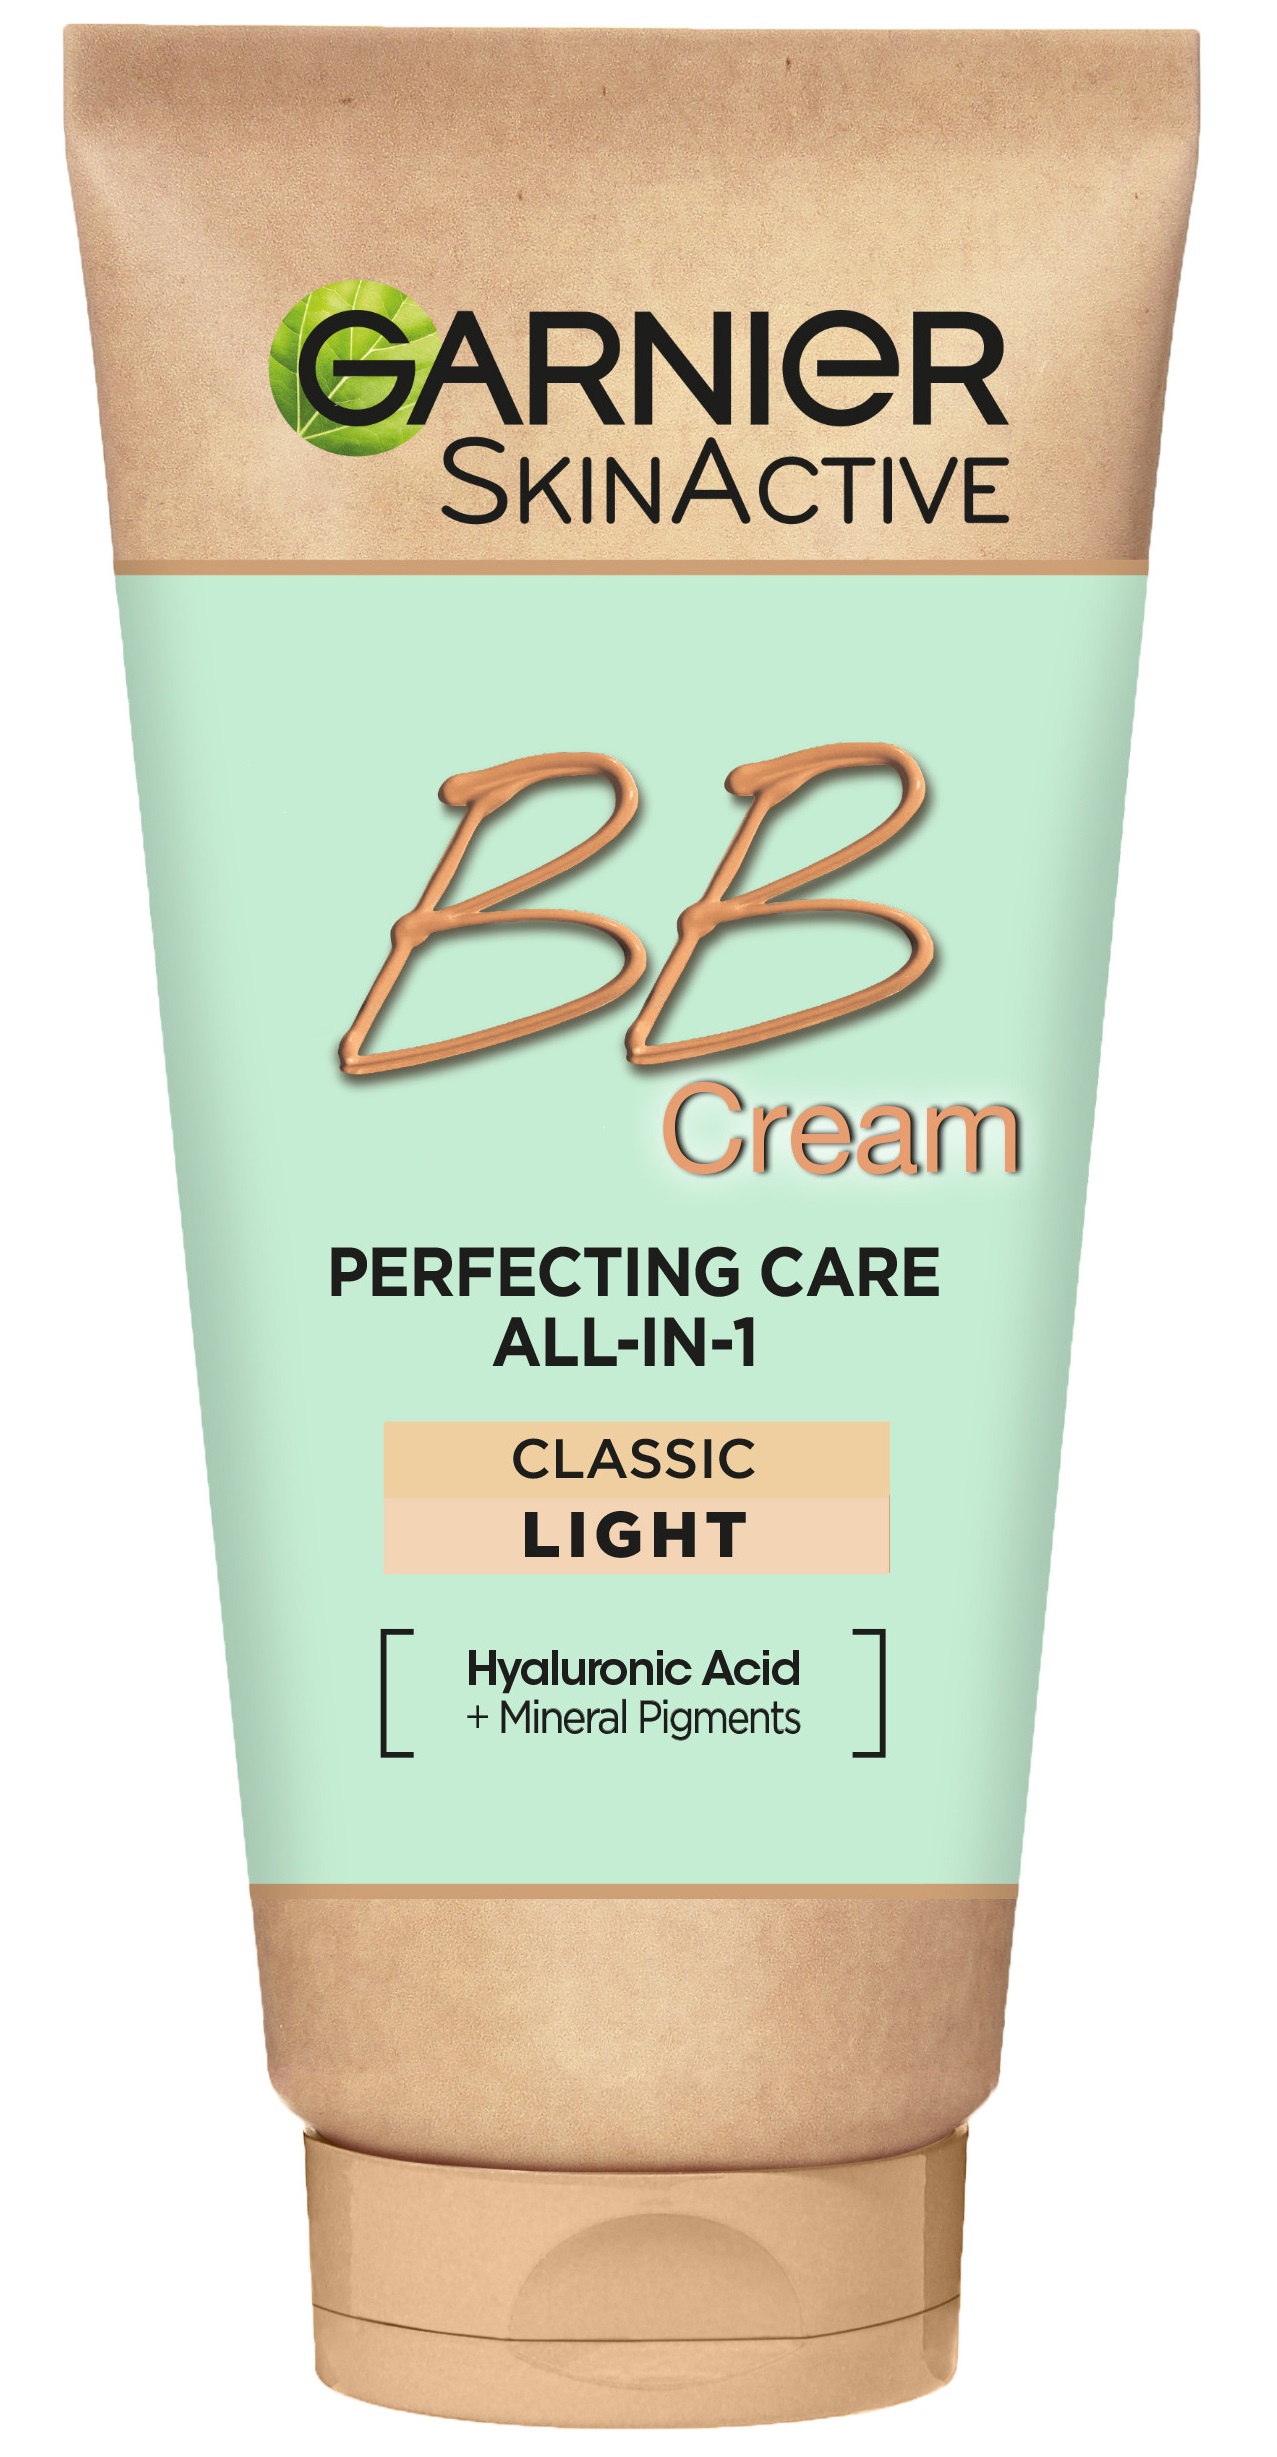 Garnier SkinActive Cream Perfecting Care All-In-1 Light | lyko.com